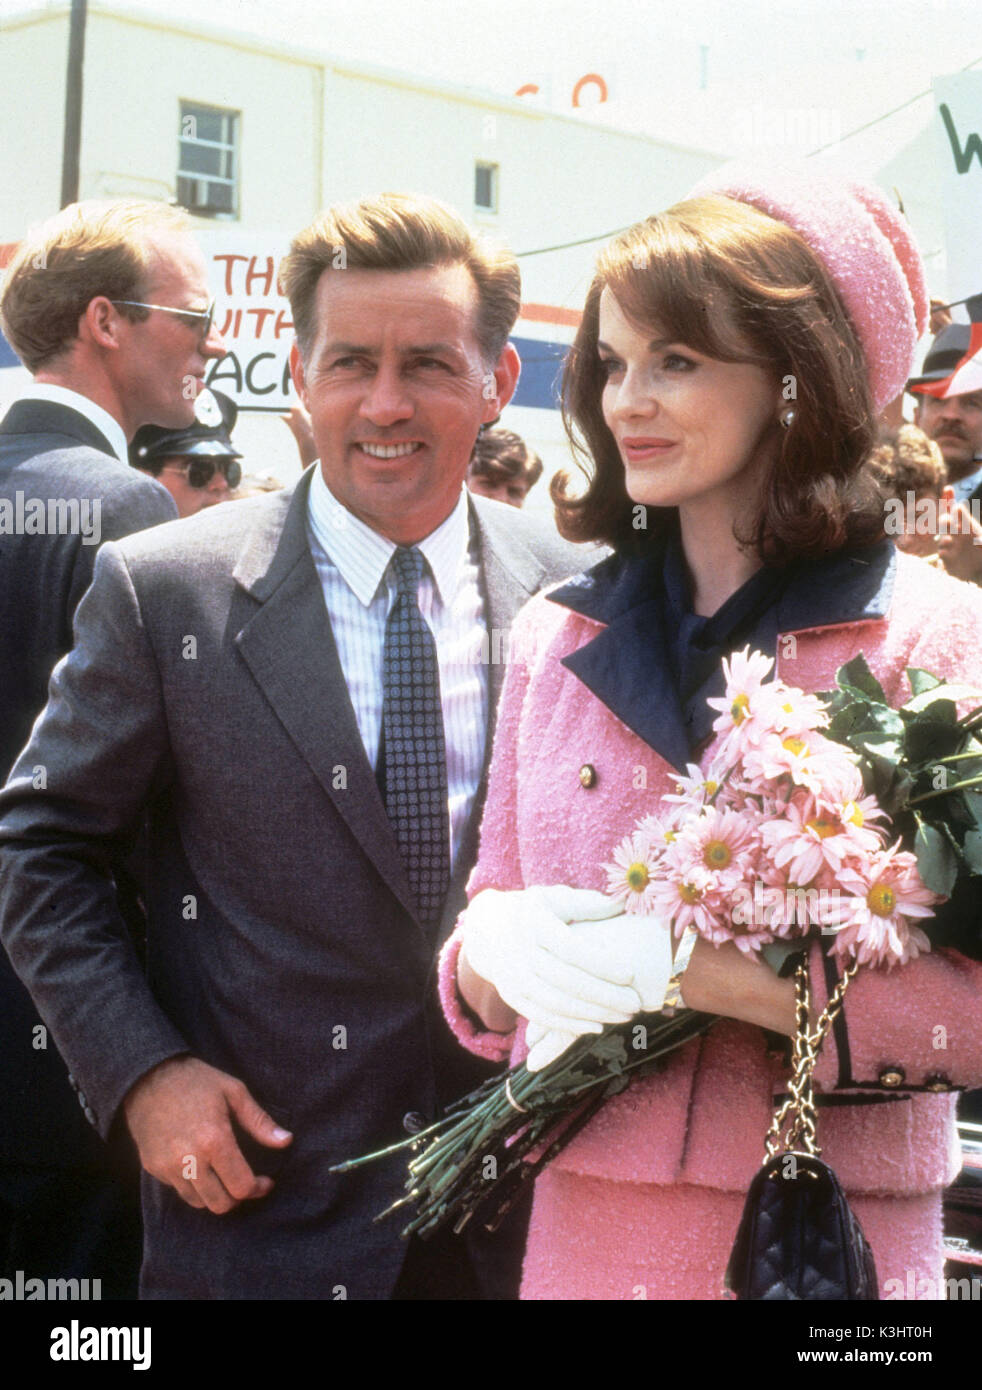 KENNEDY MARTIN SHEEN as President John F Kennedy, BLAIR BROWN as Jacqueline Kennedy     Date: 1983 Stock Photo